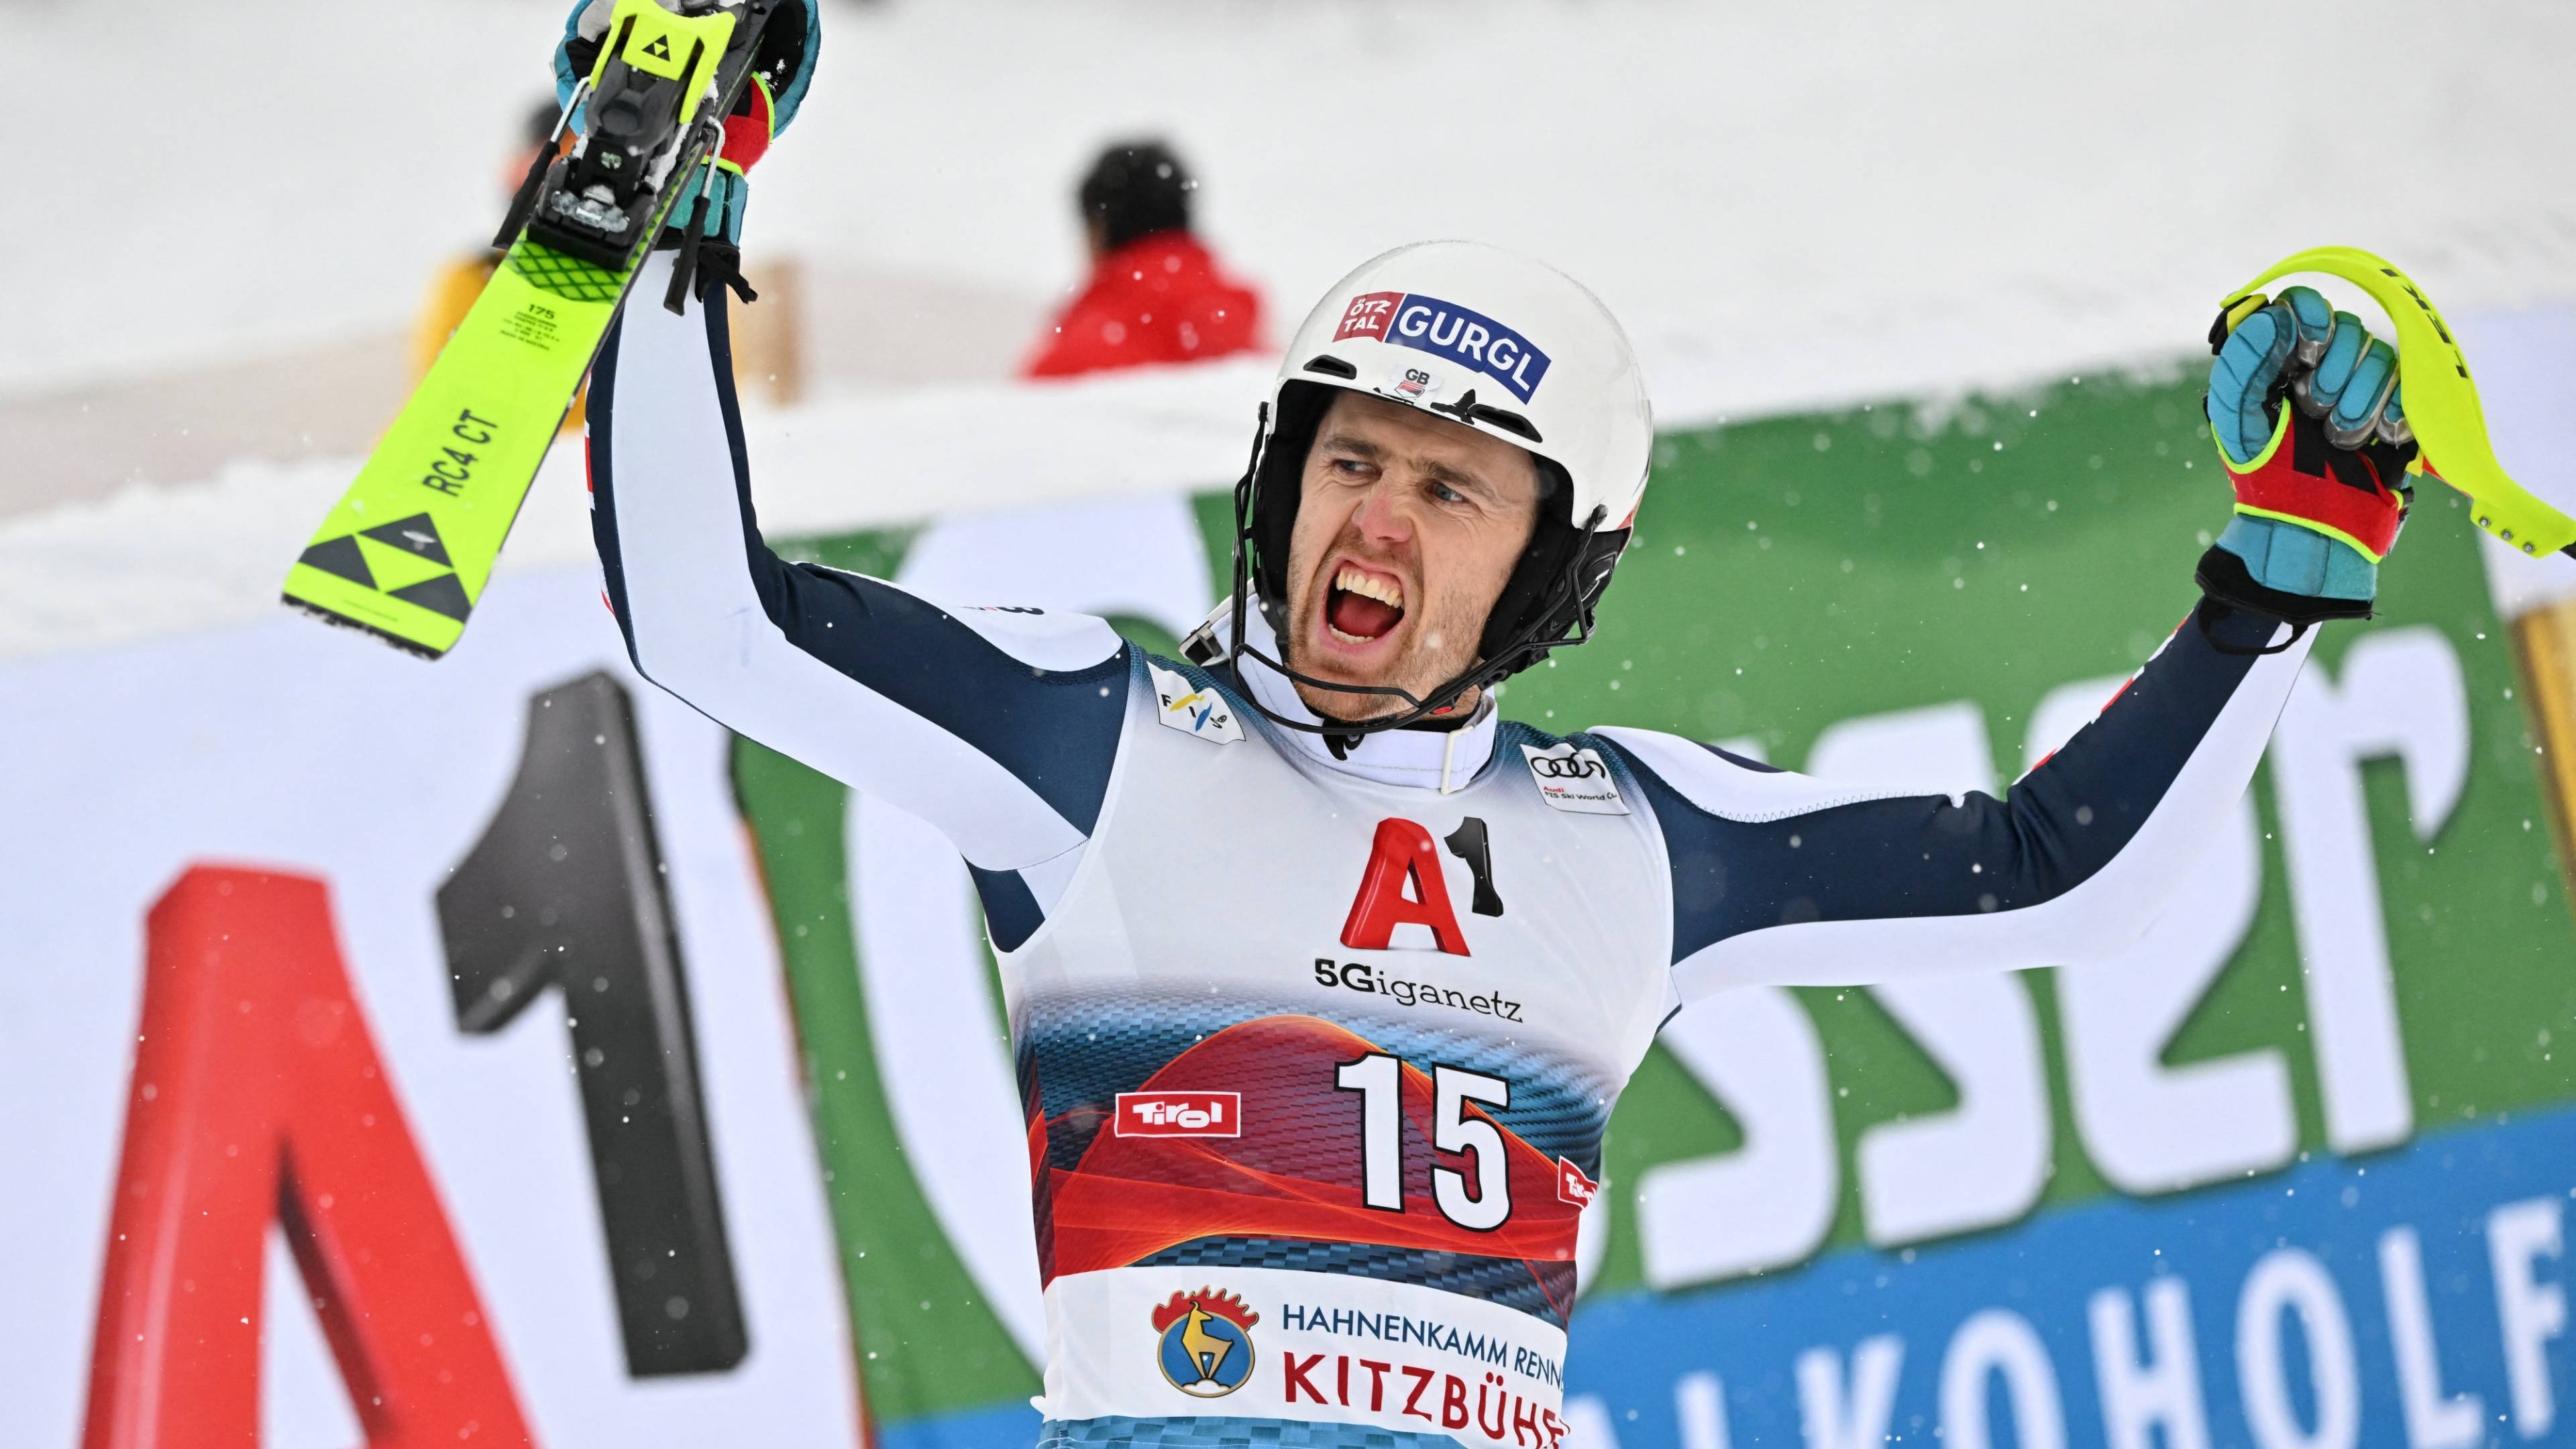 Slalom: Dave Ryding, Kitzbuhel, An alpine ski racing, Extreme winter sports. 3840x2160 4K Background.